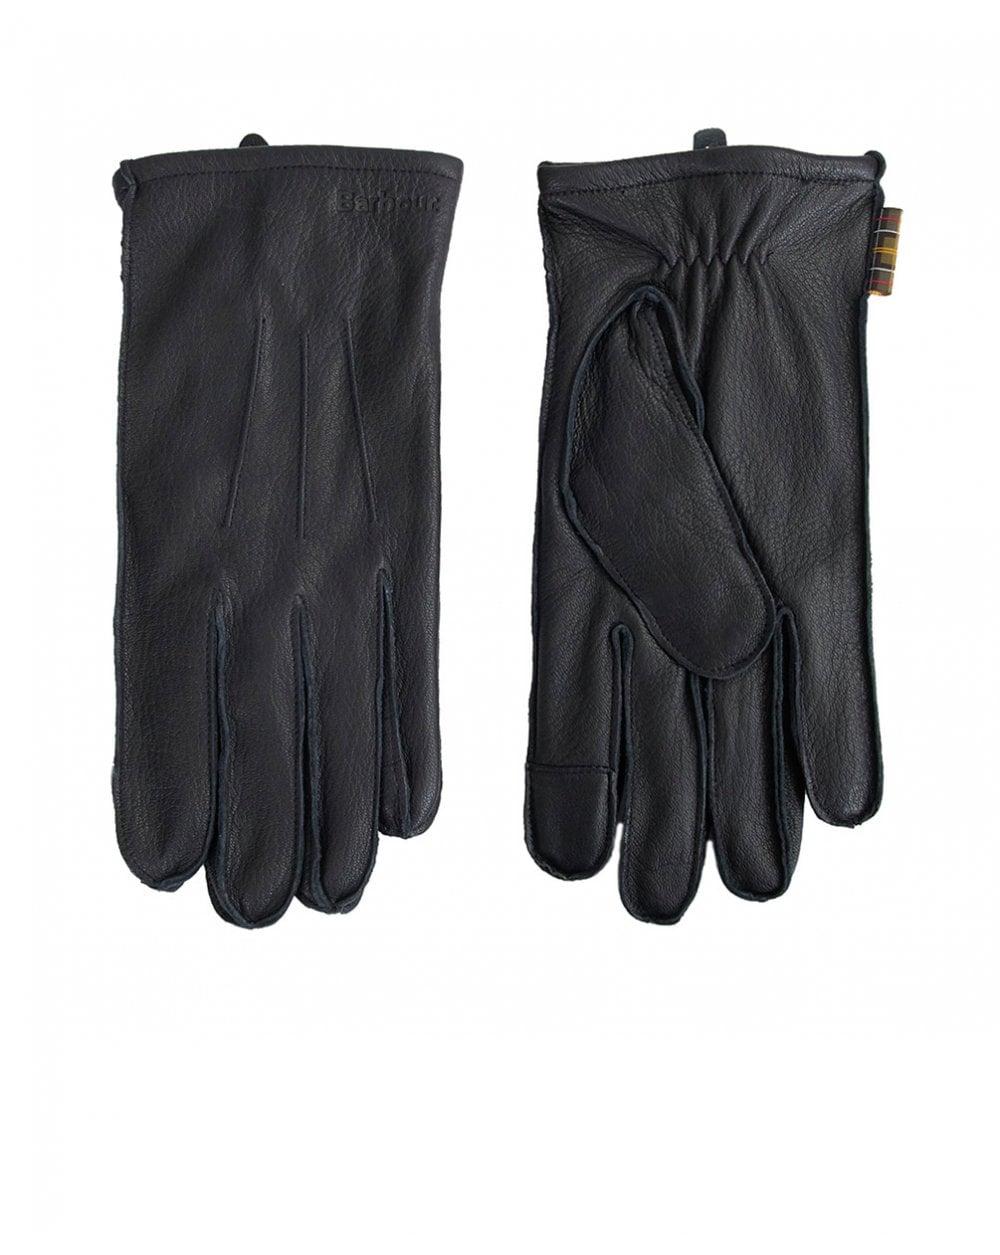 Barbour Bexley Leather Gloves in Black for Men - Lyst